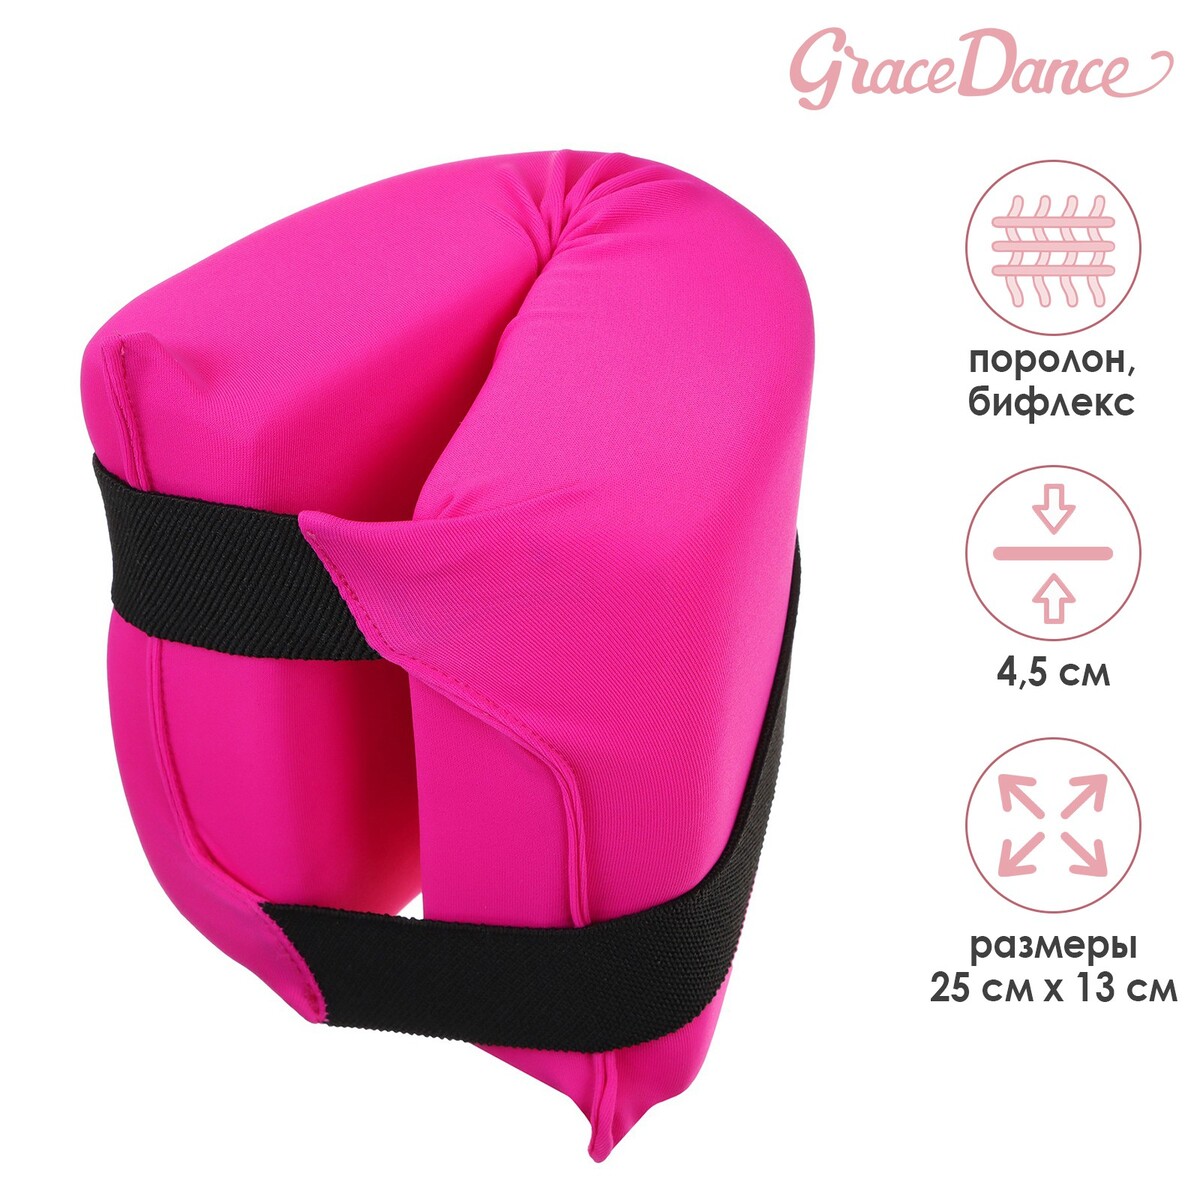 Подушка для растяжки grace dance, цвет фуксия движение форма танец анг movement form dance